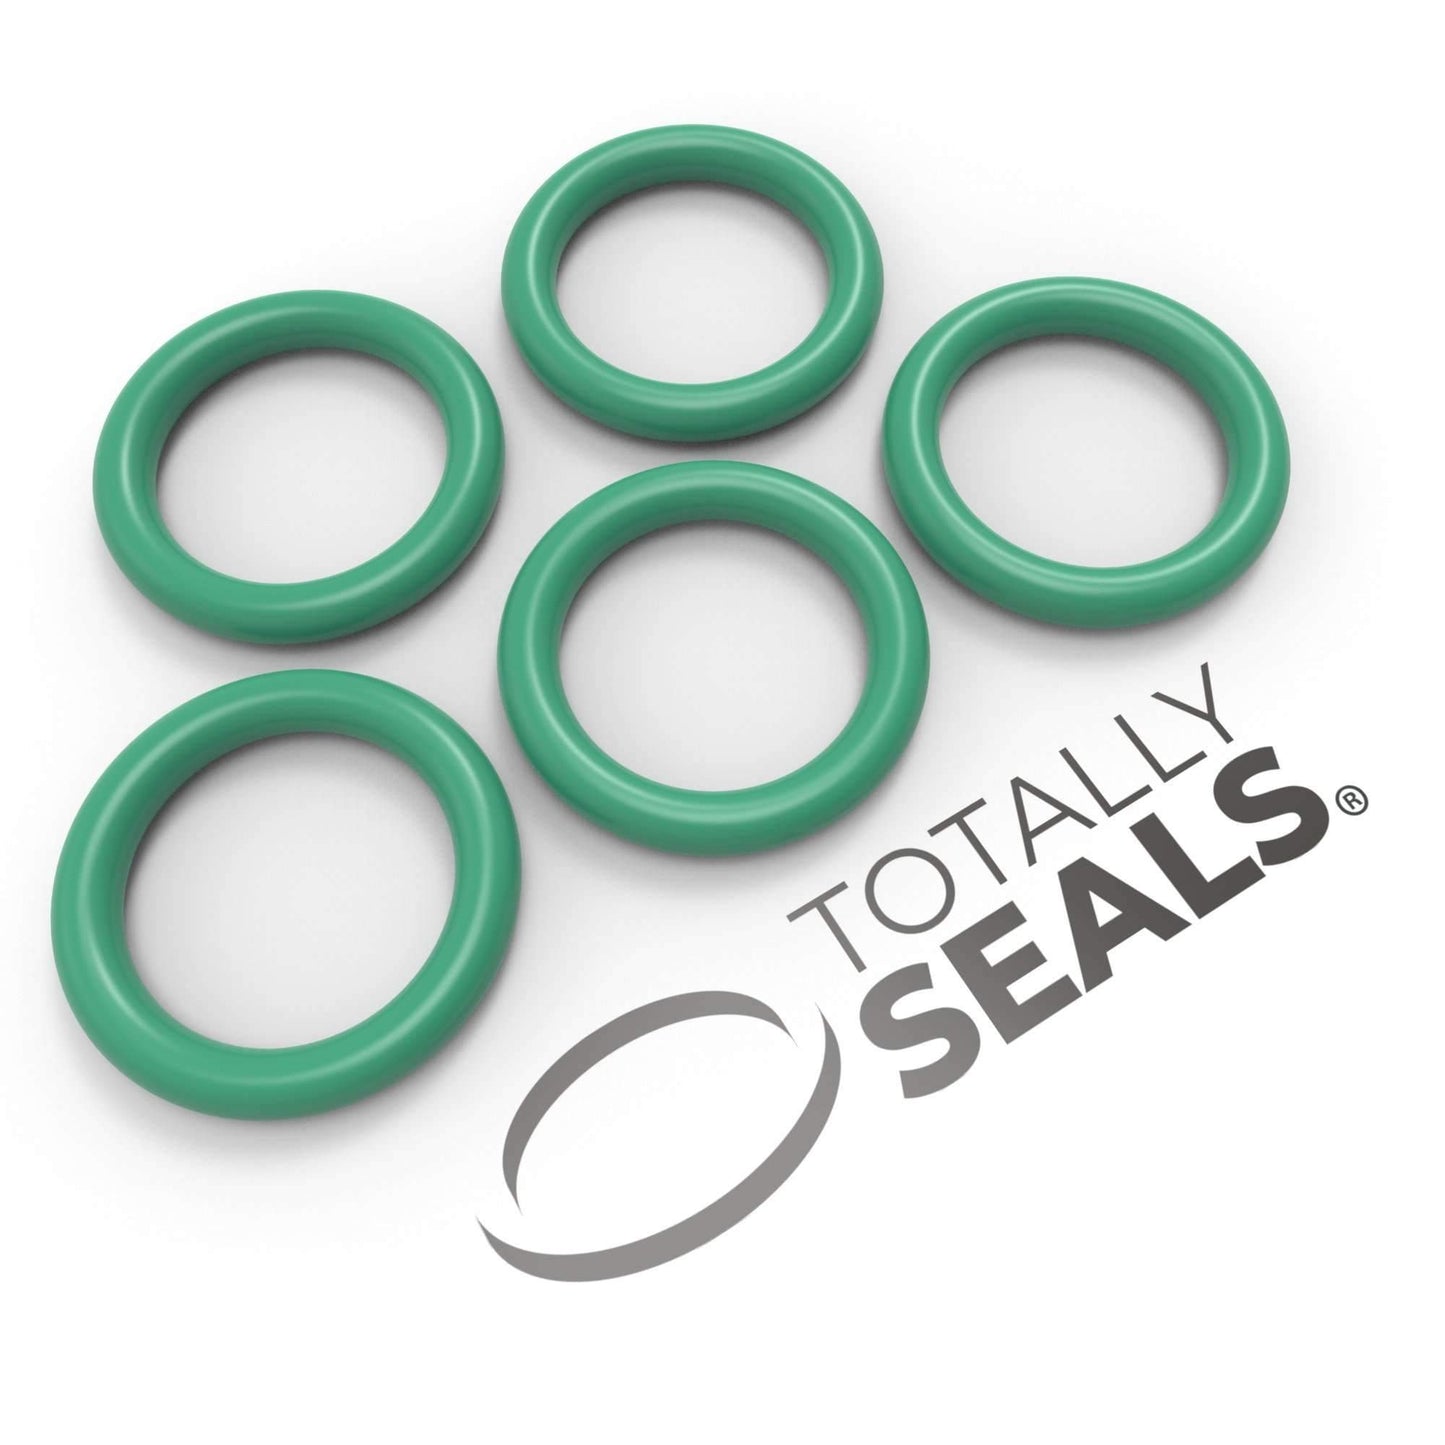 18mm x 2mm (22mm OD) FKM (Viton™) O-Rings - Totally Seals®